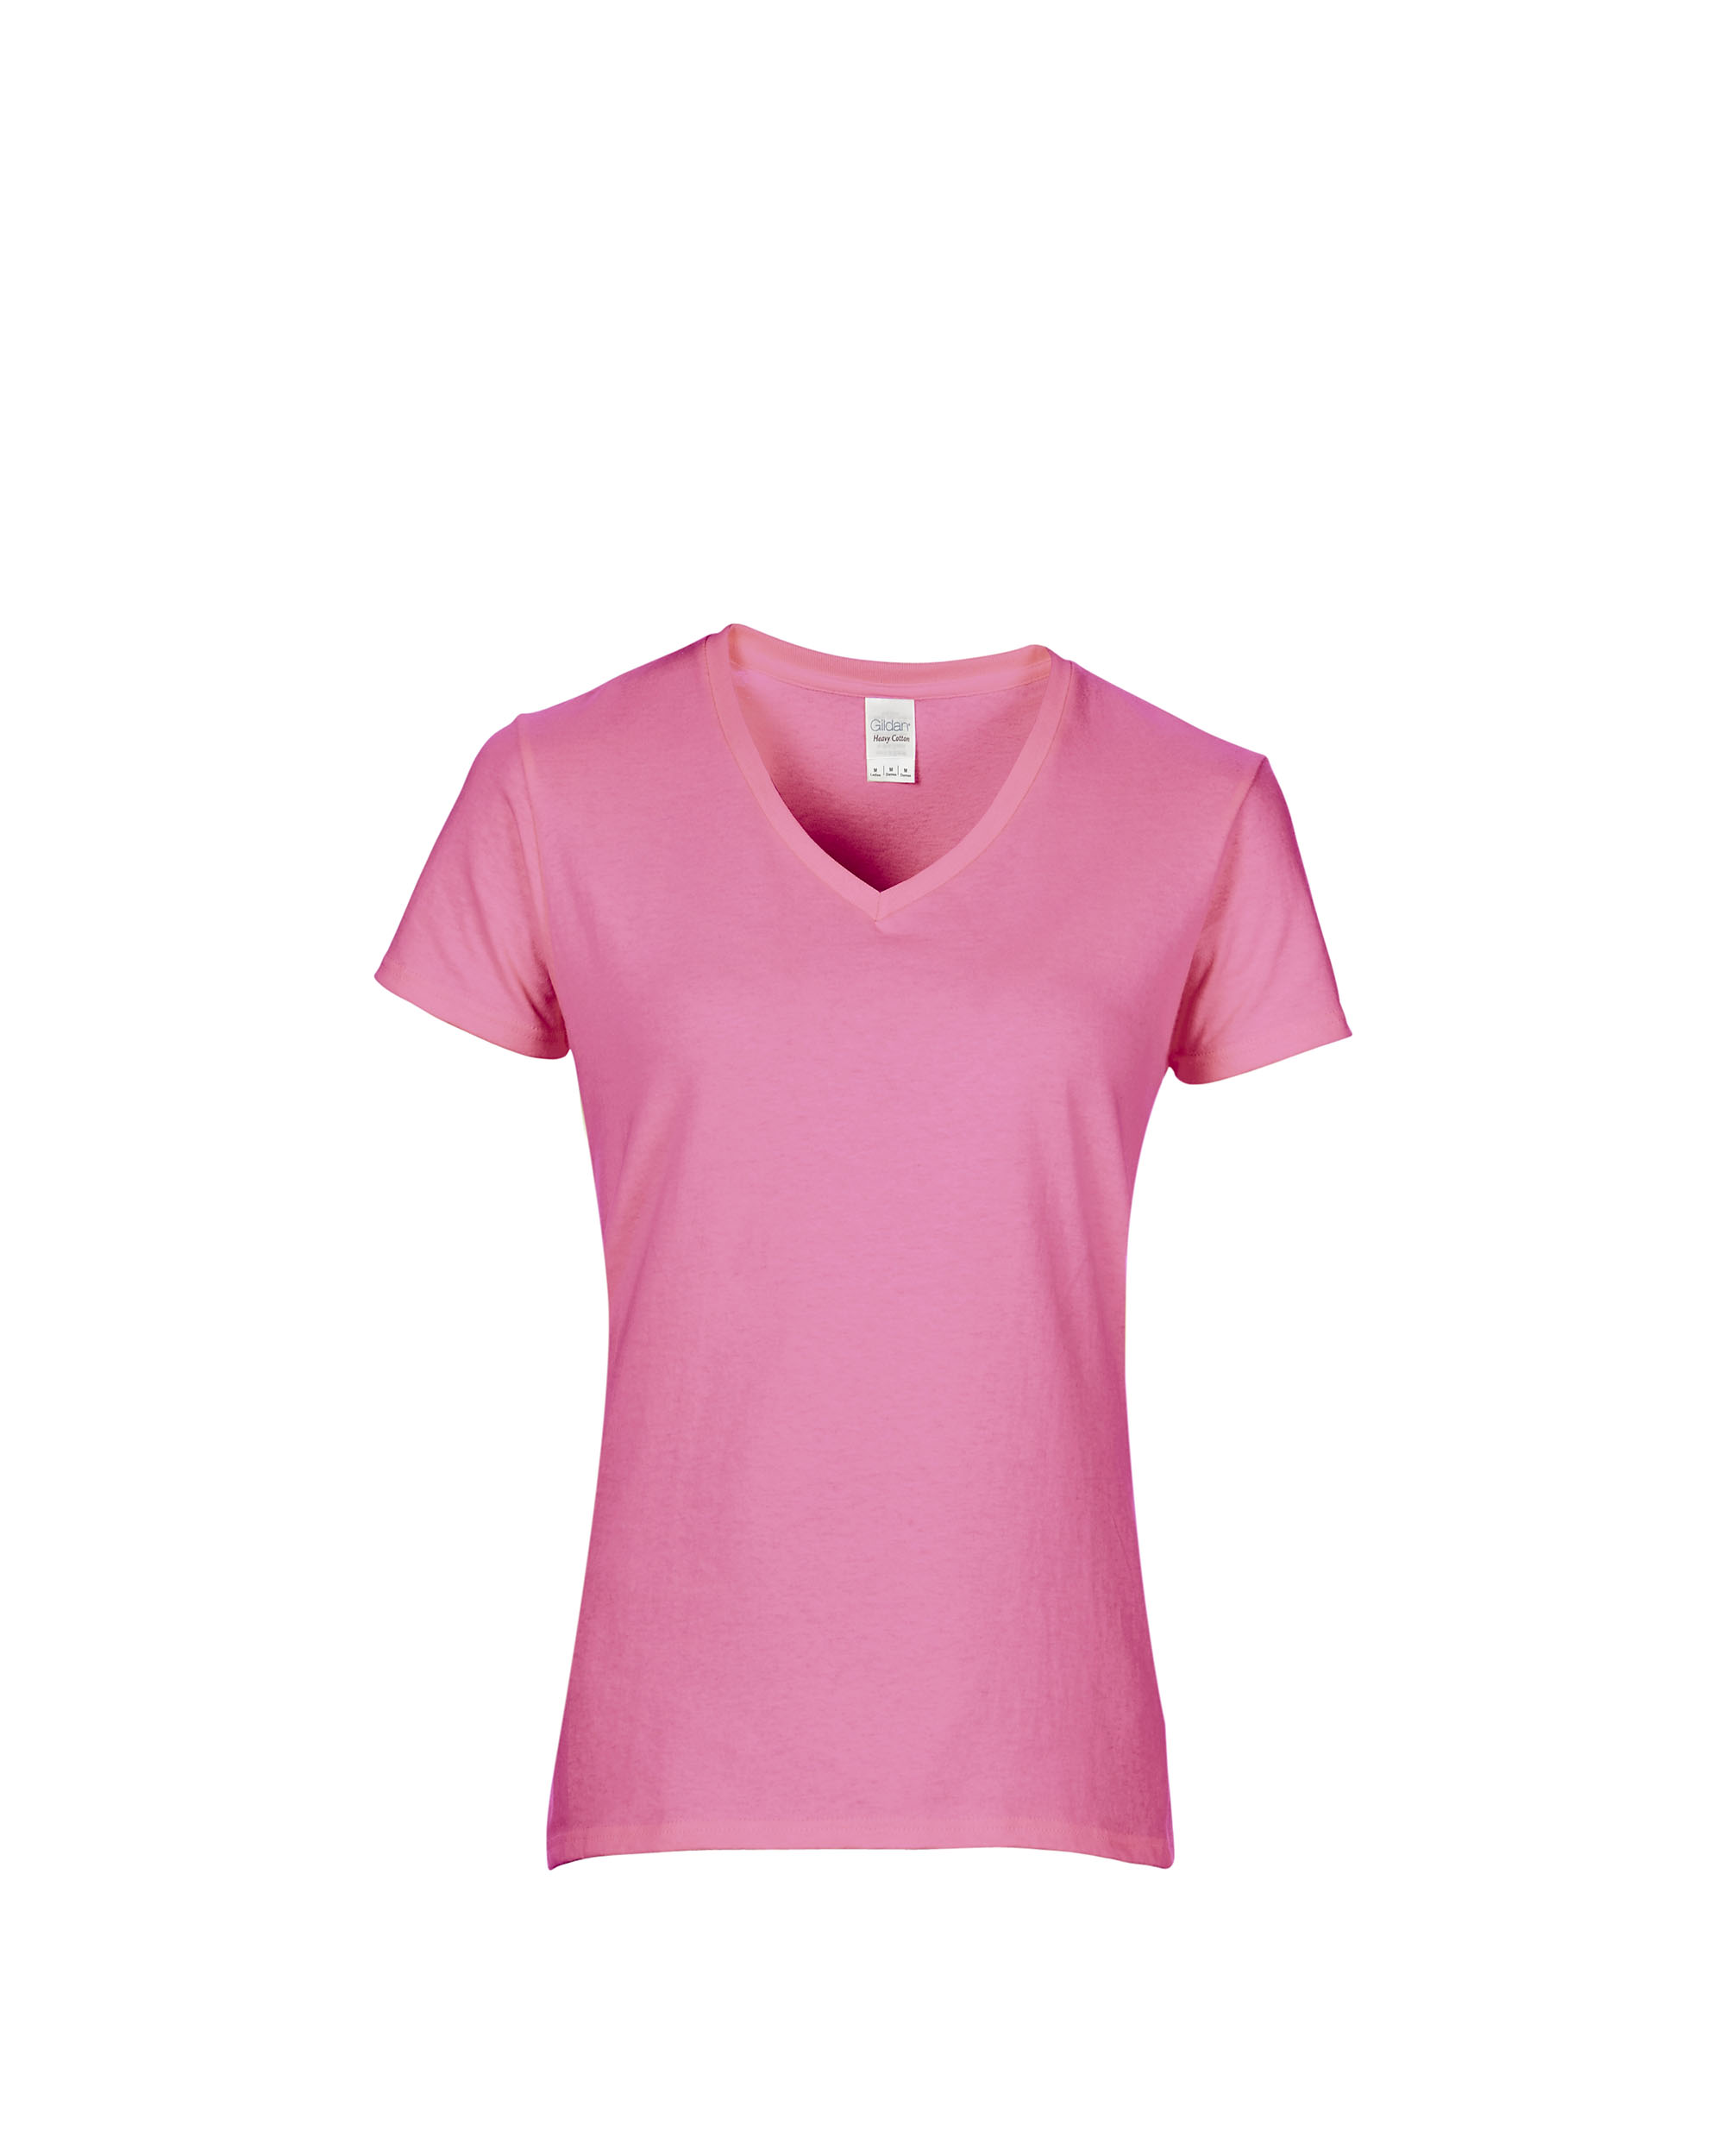 pink v neck t shirt women's